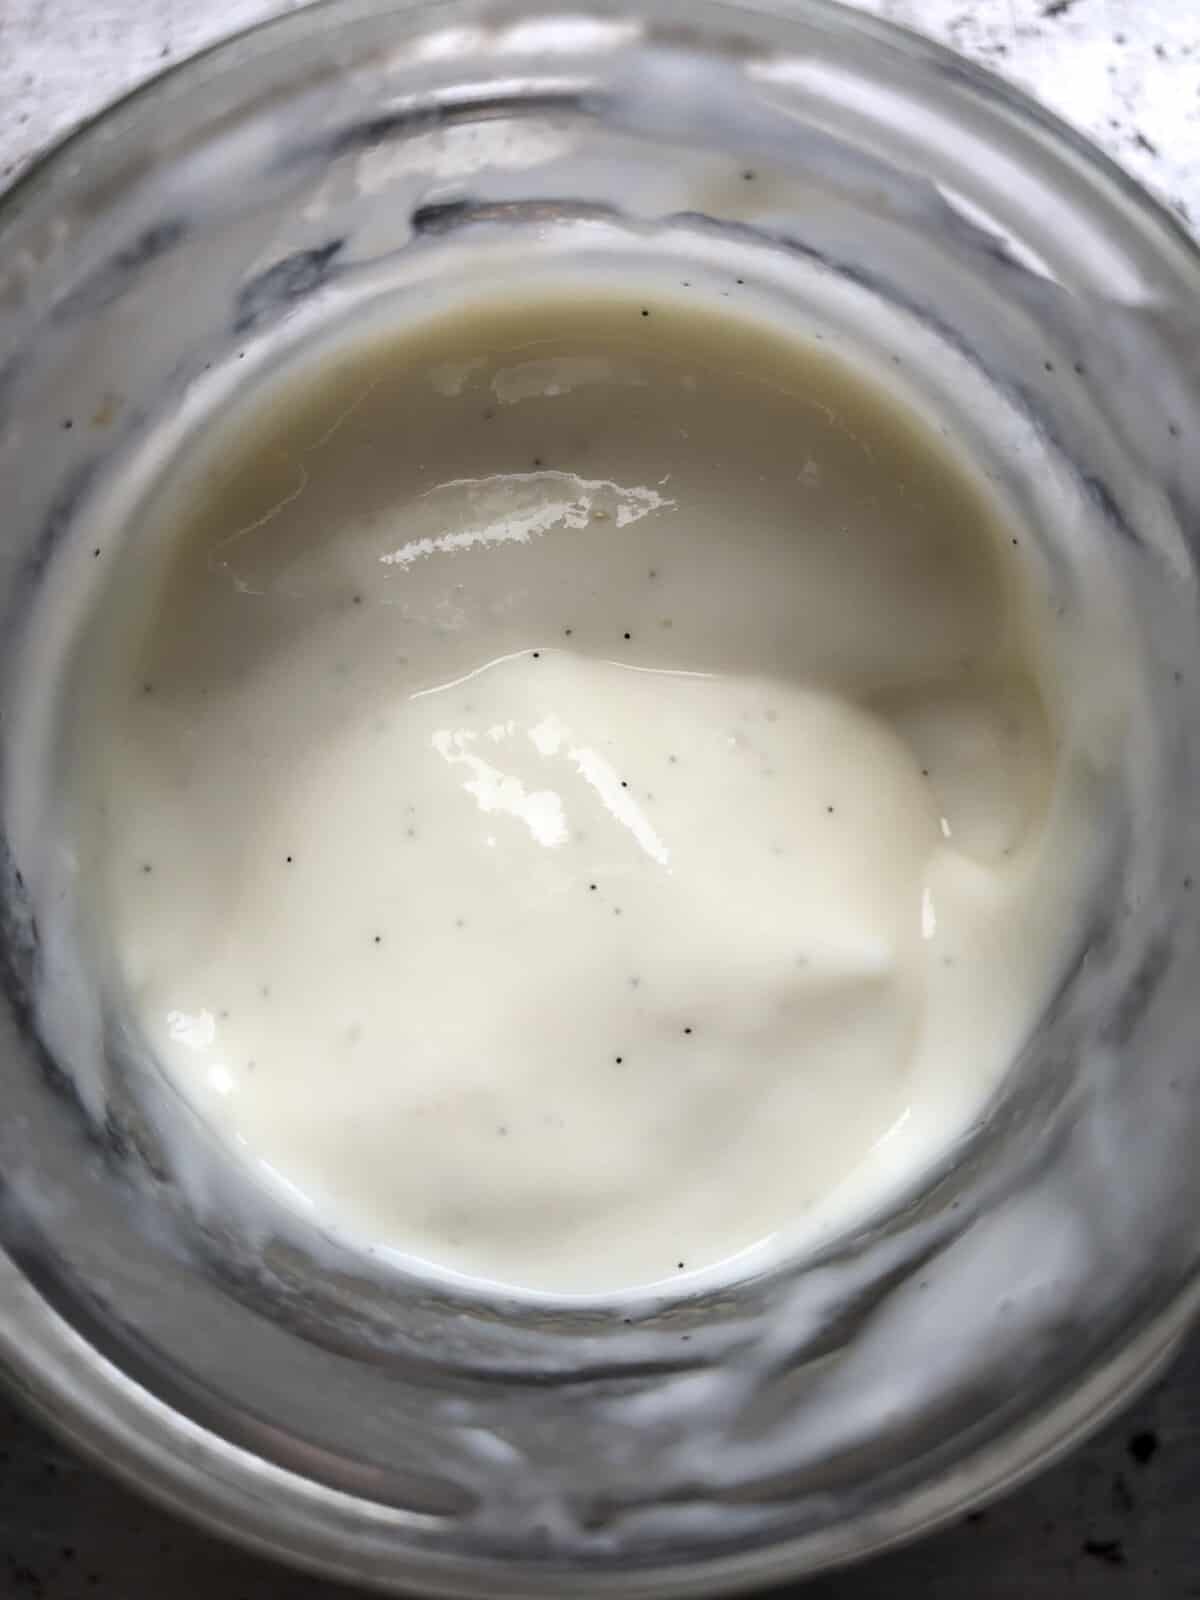 Homemade vanilla pudding made from homemade vanilla pudding mix.